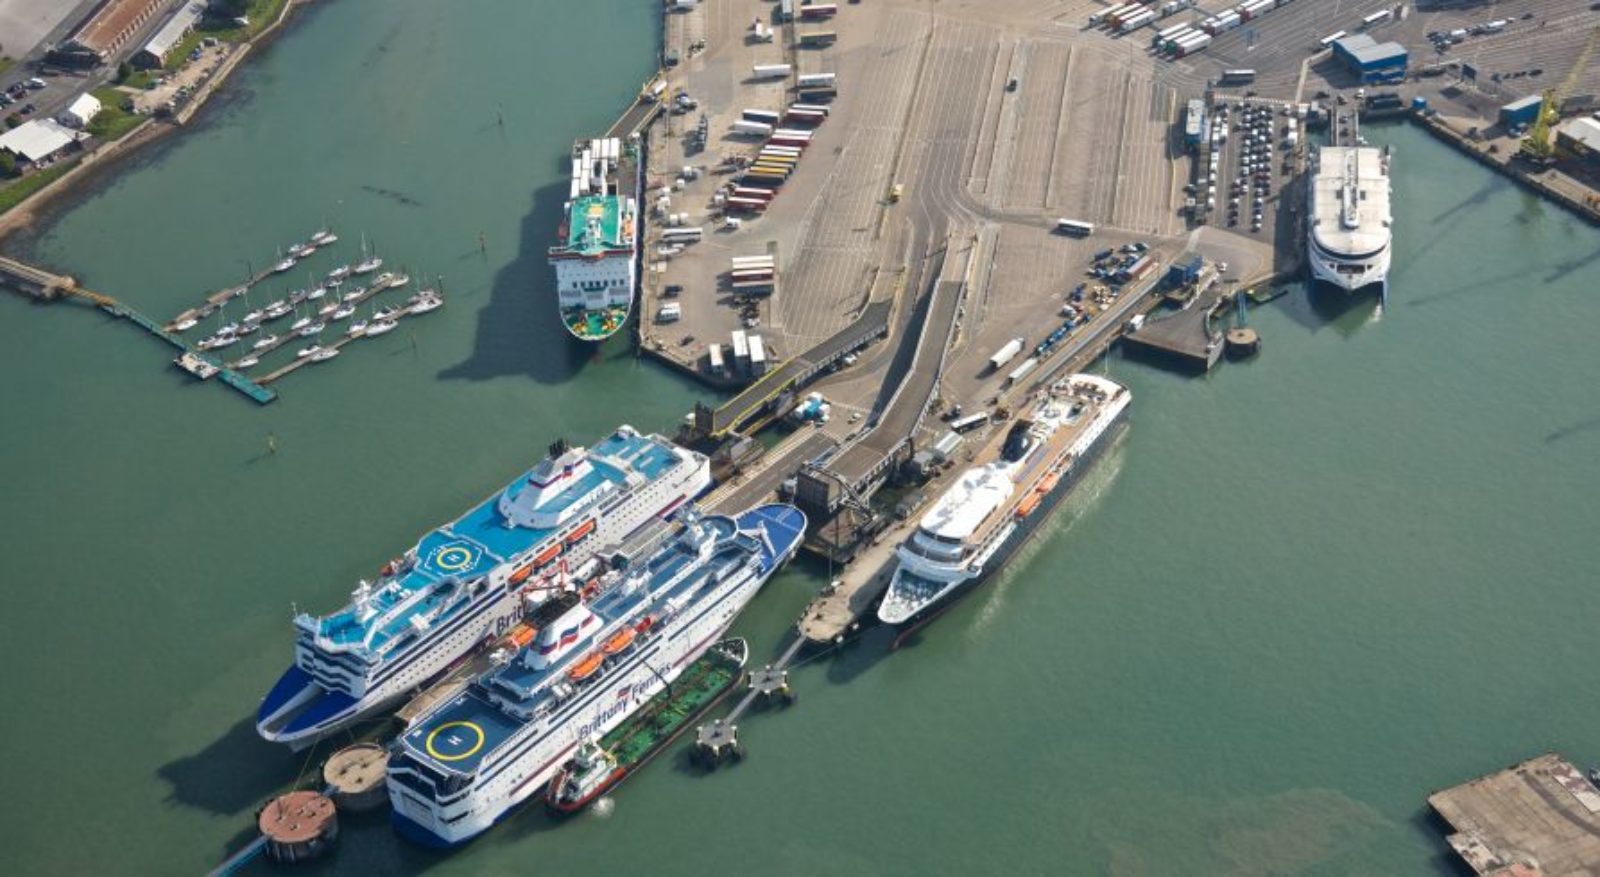 Portsmouth Port